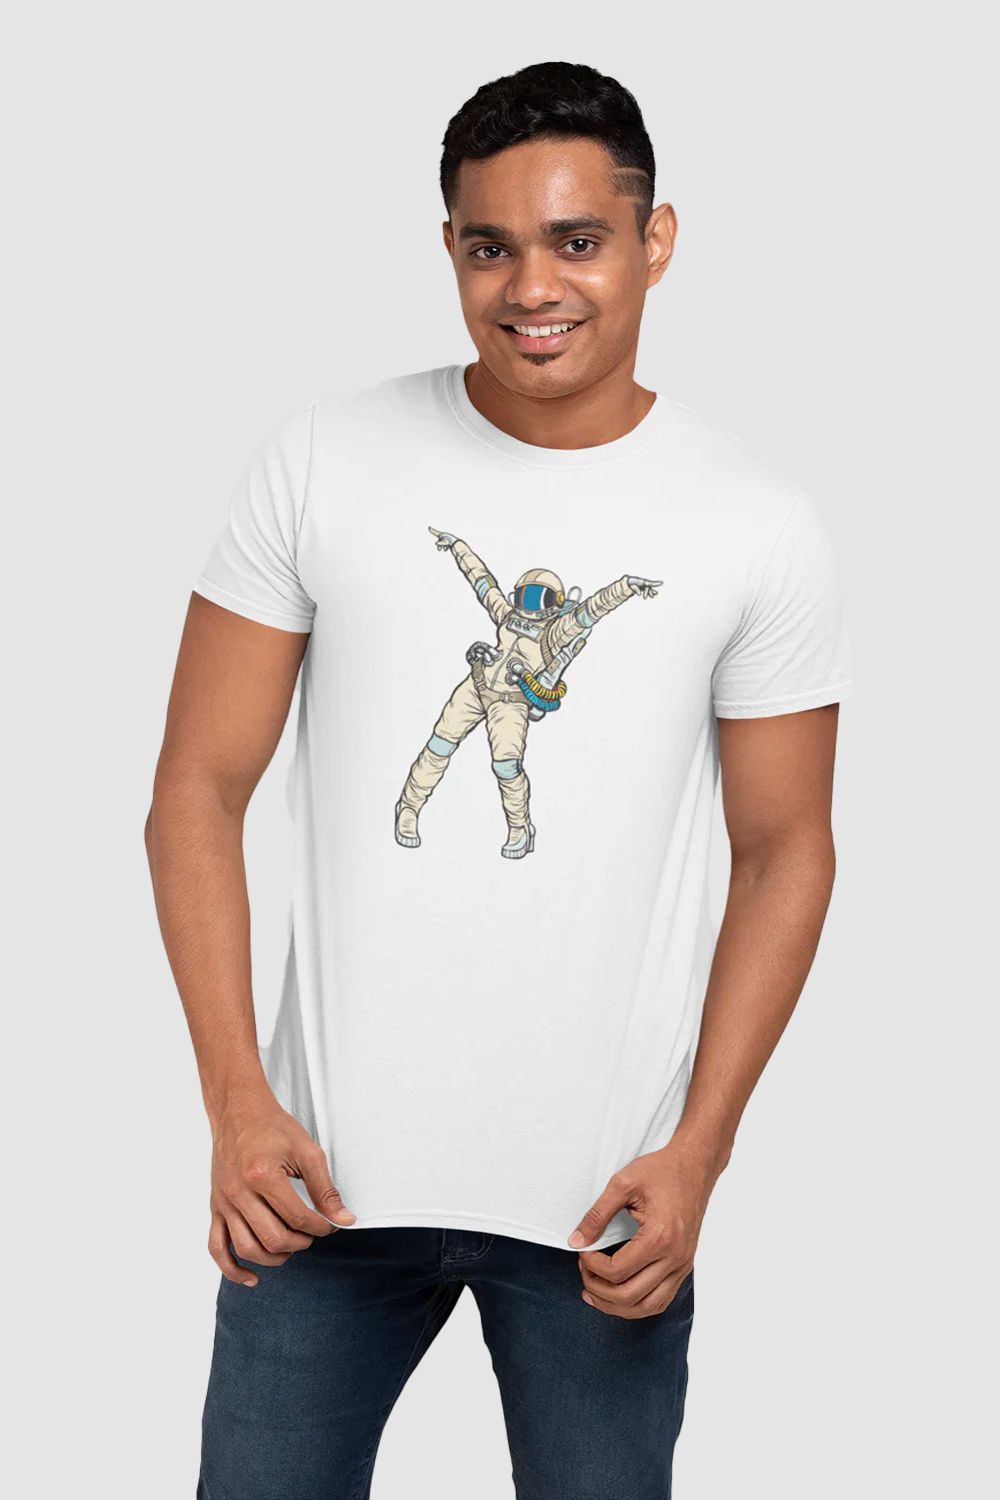 Astronaut Dancing Graphic Printed White Tshirt